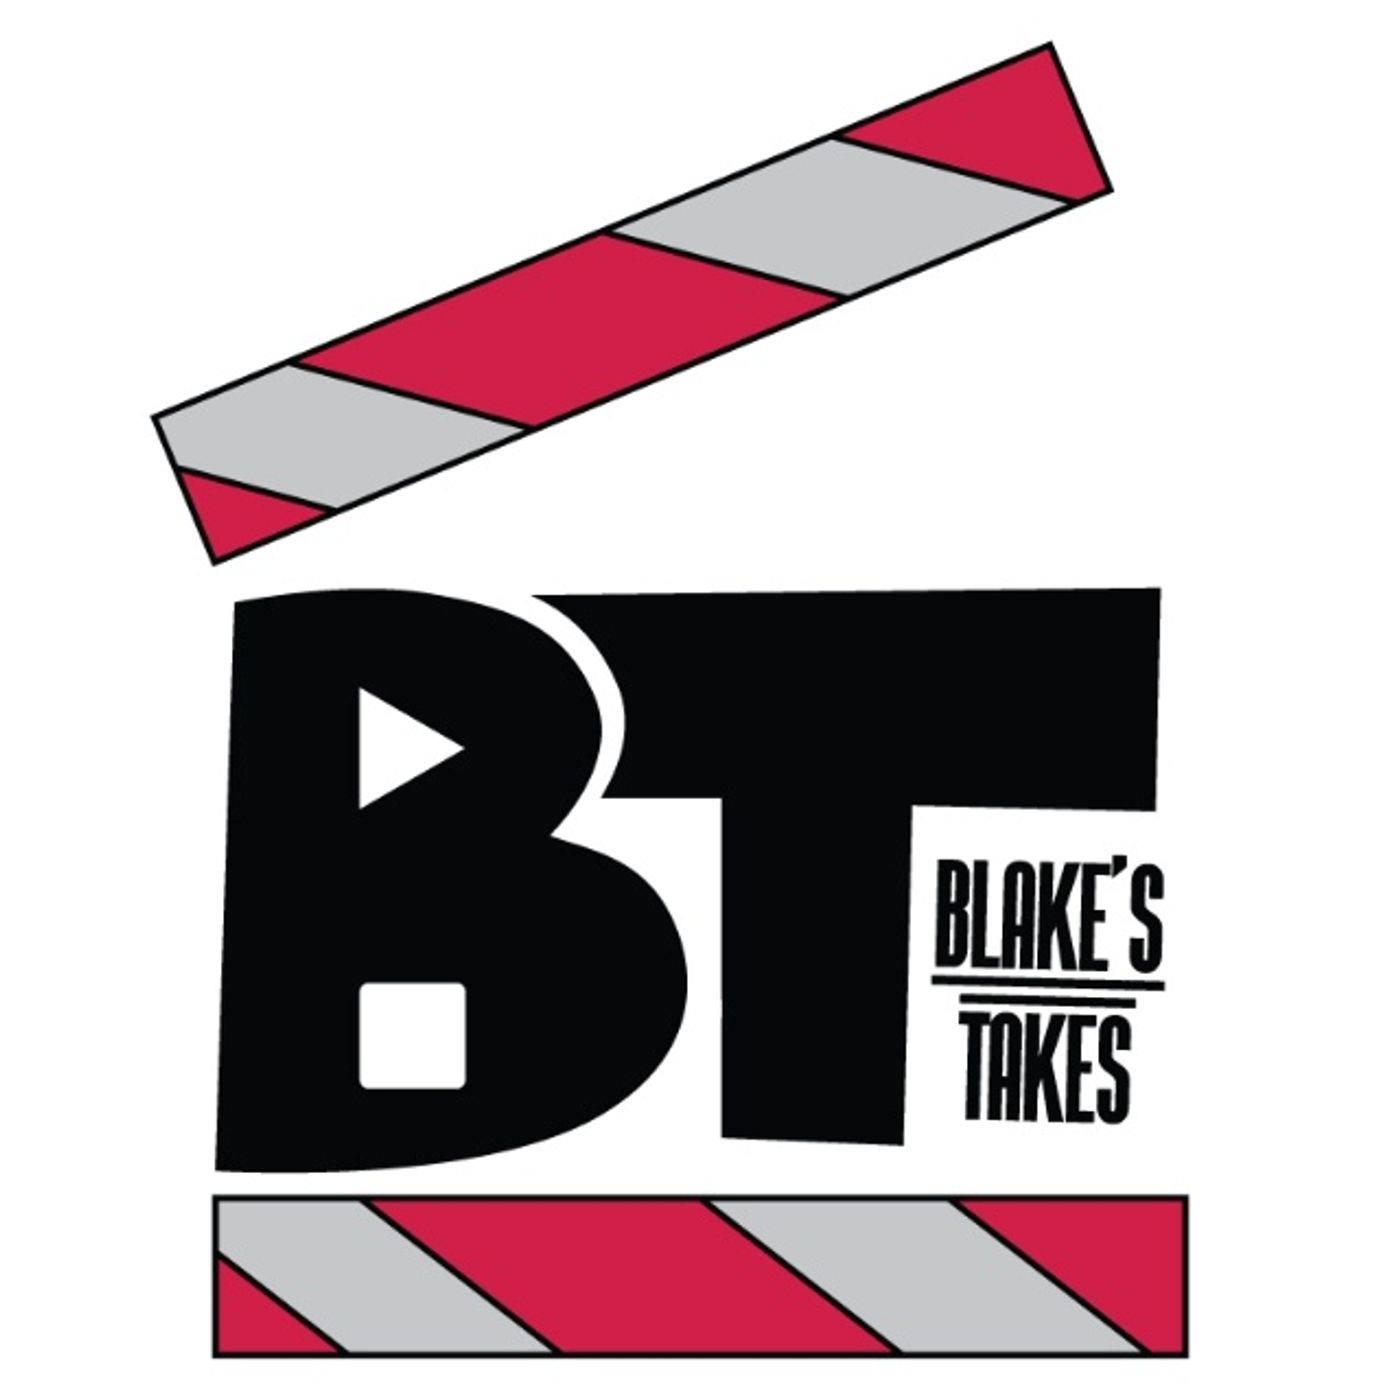 Blake’s Takes